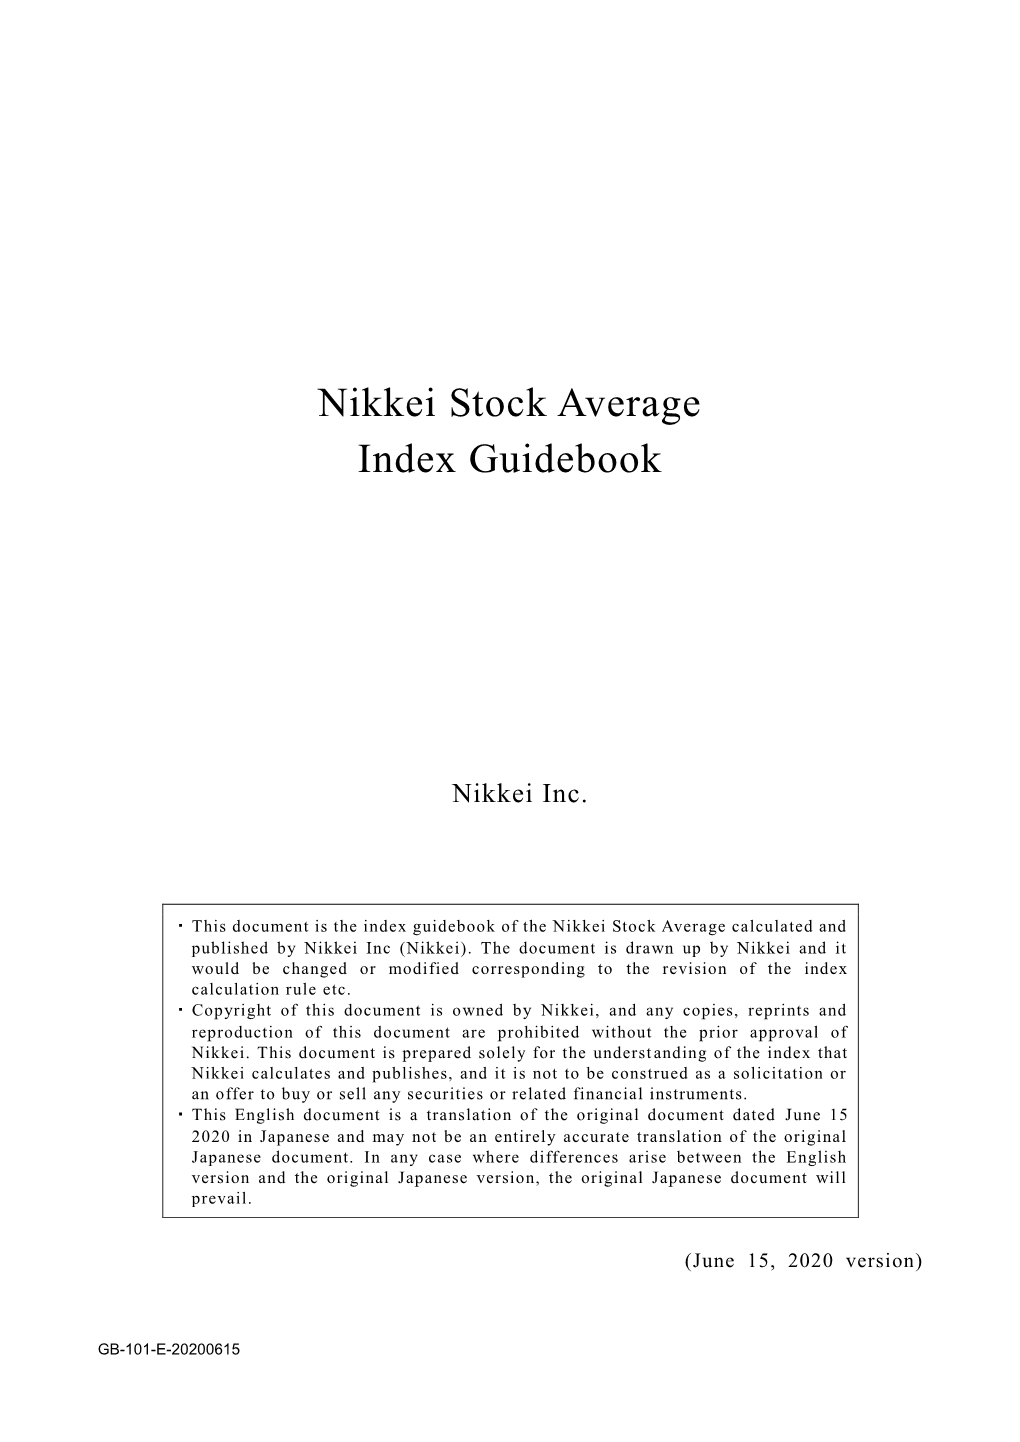 Nikkei Stock Average Index Guidebook